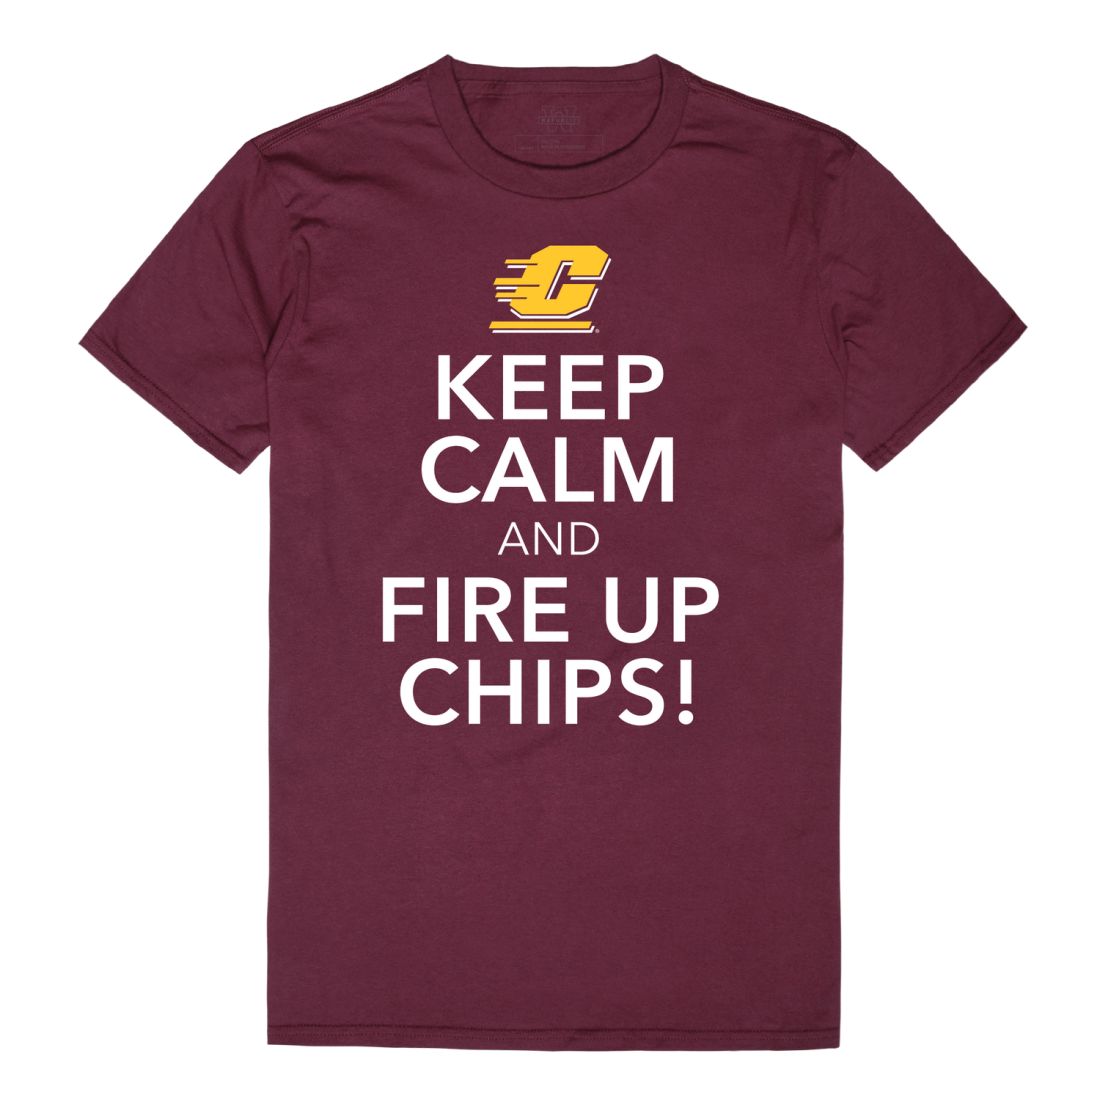 CMU Central Michigan University Chippewas Keep Calm T-Shirt